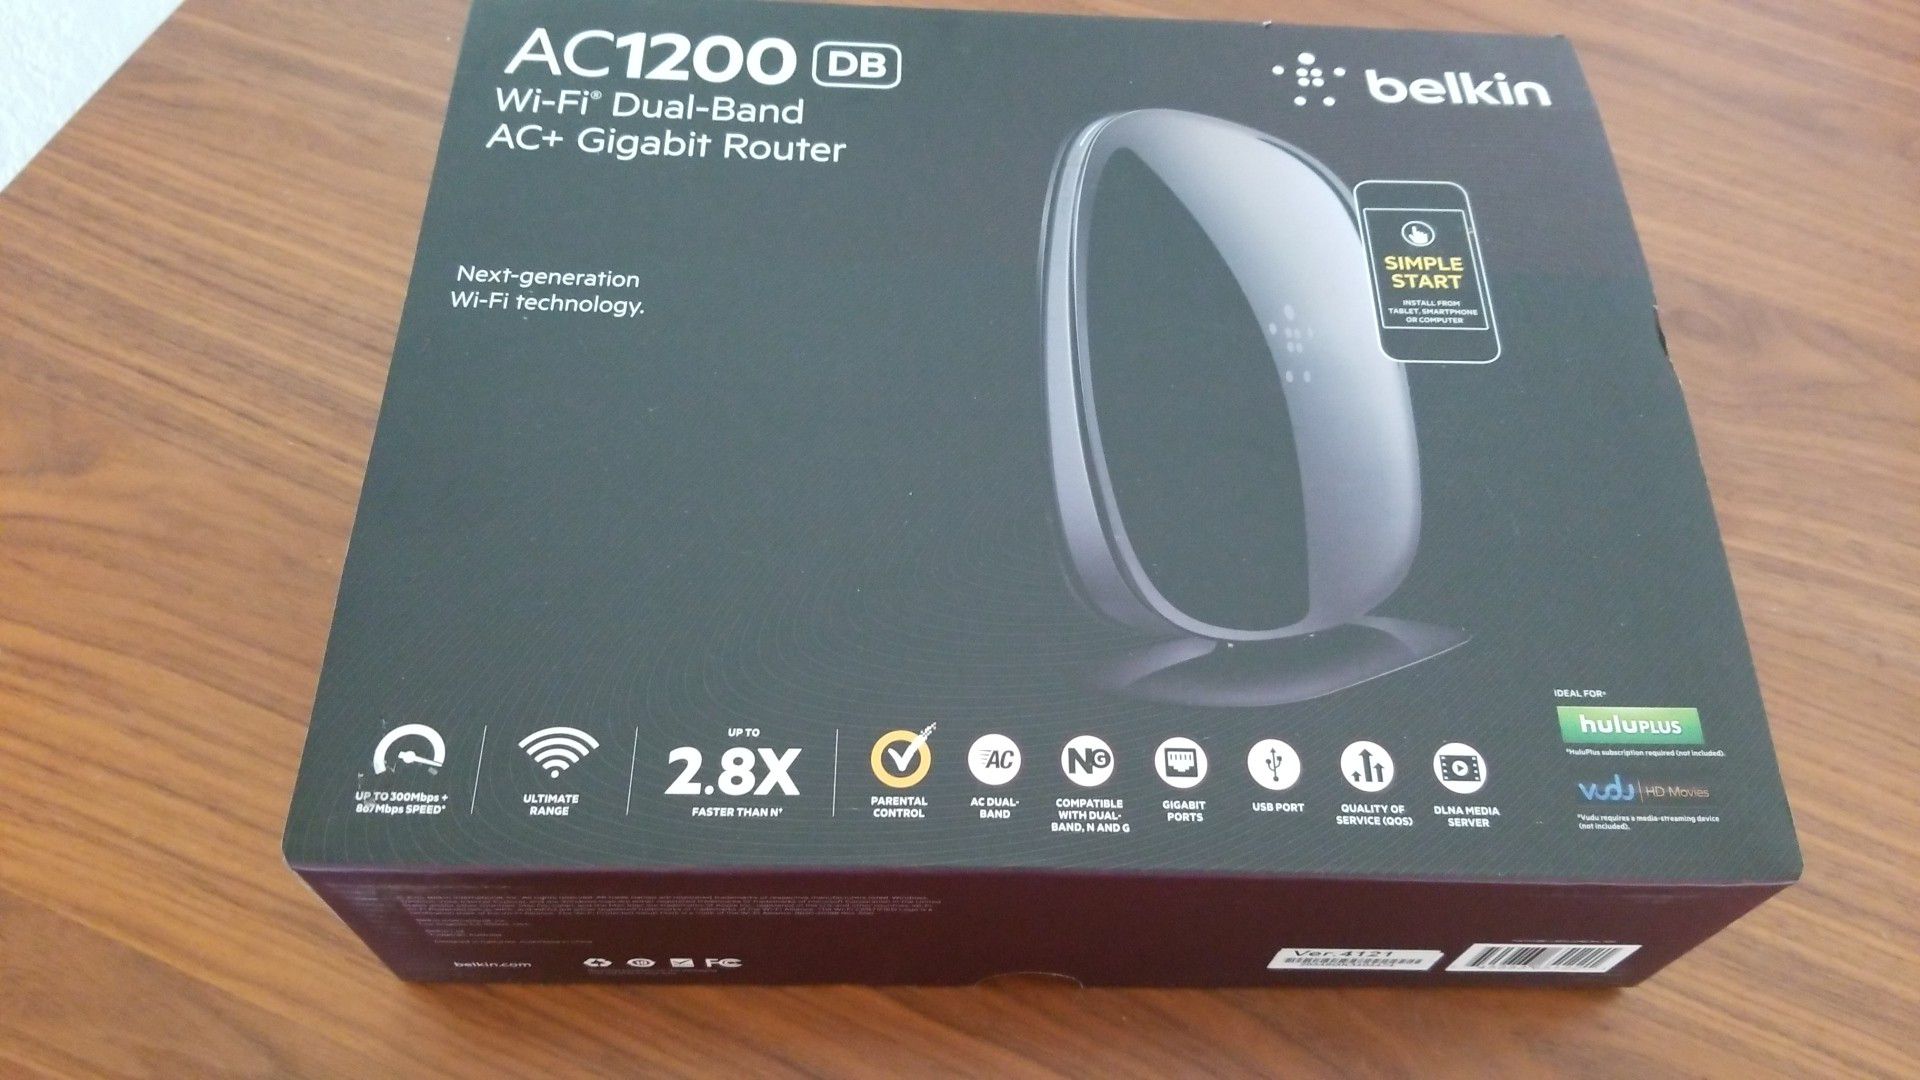 Belkin AC1200 WiFi Dual-Band AC+ GB Router